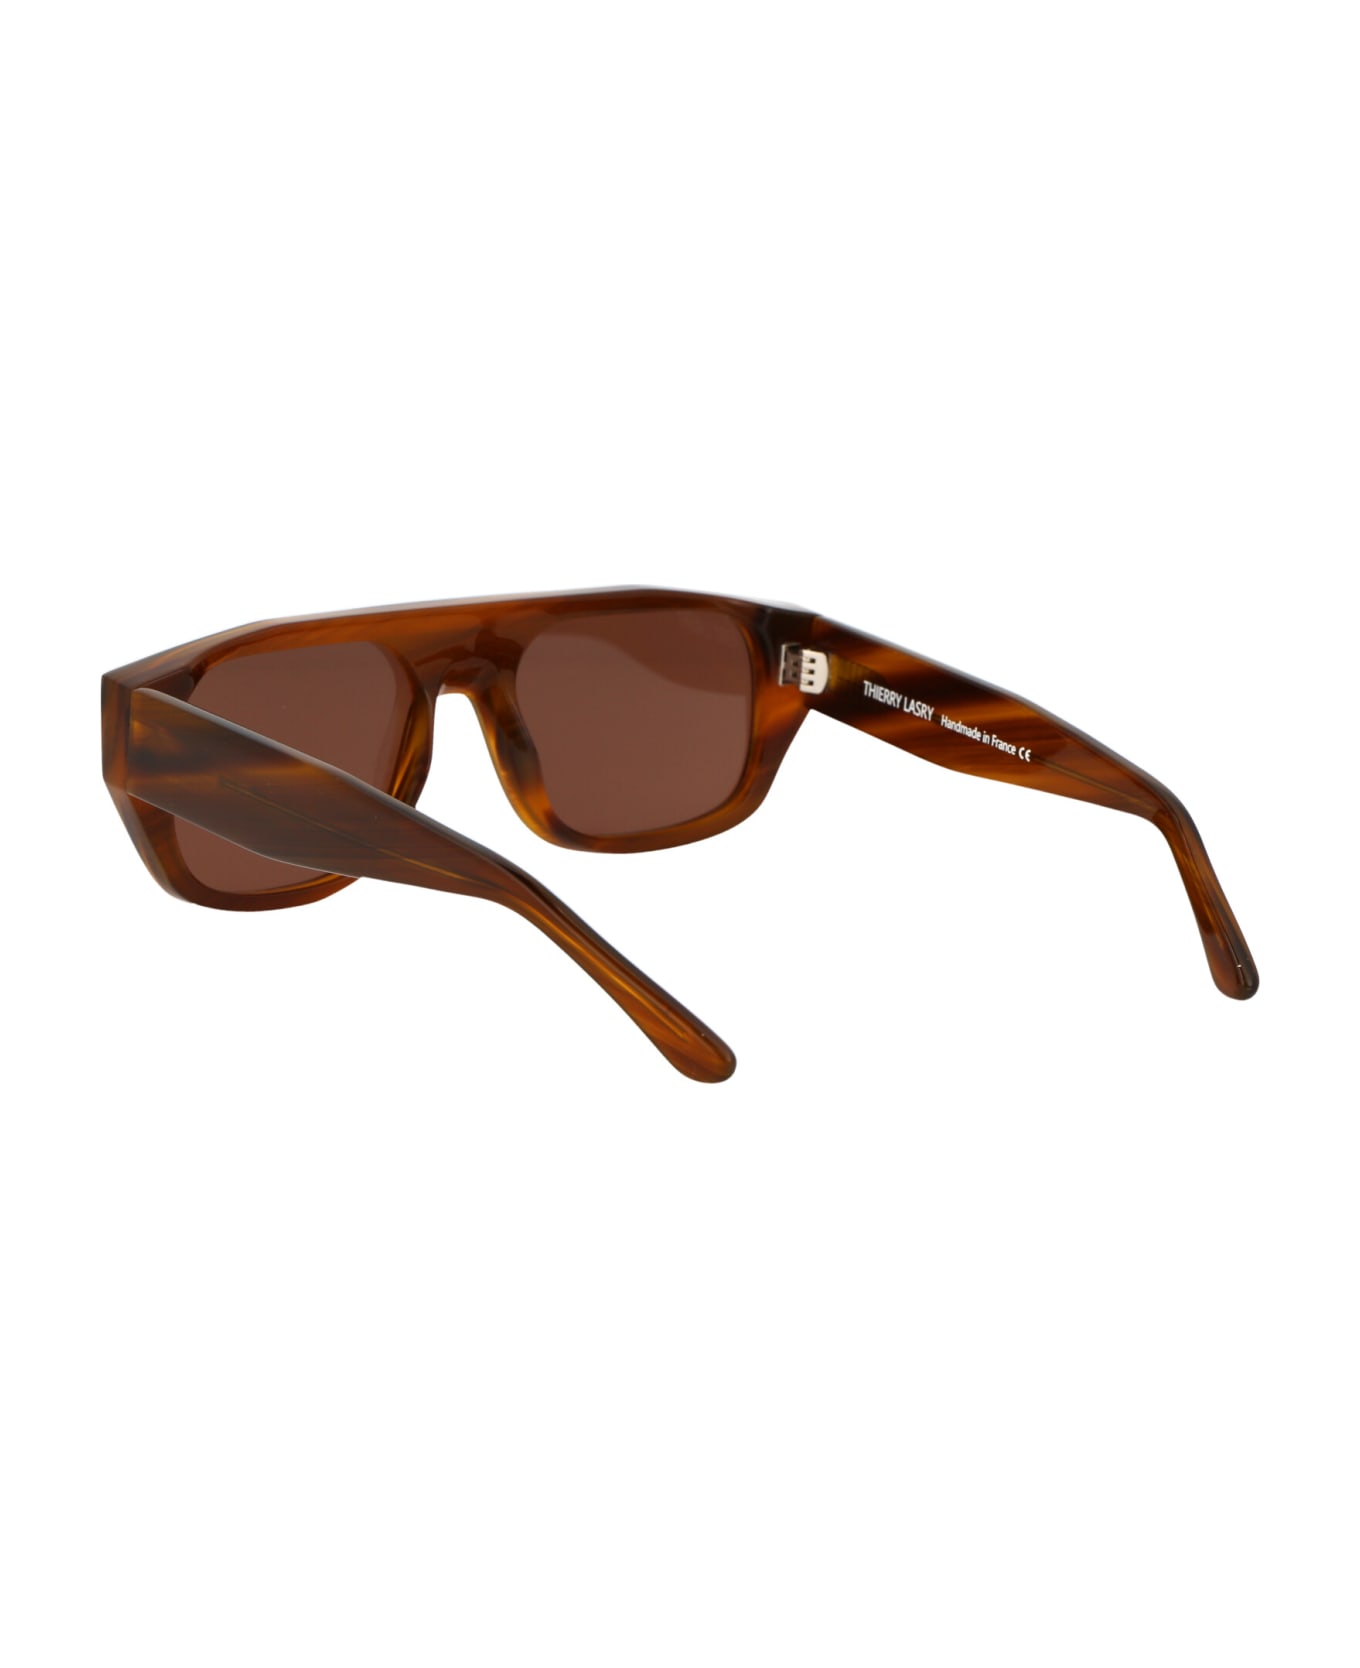 Thierry Lasry Klassy Sunglasses - 821 BROWN